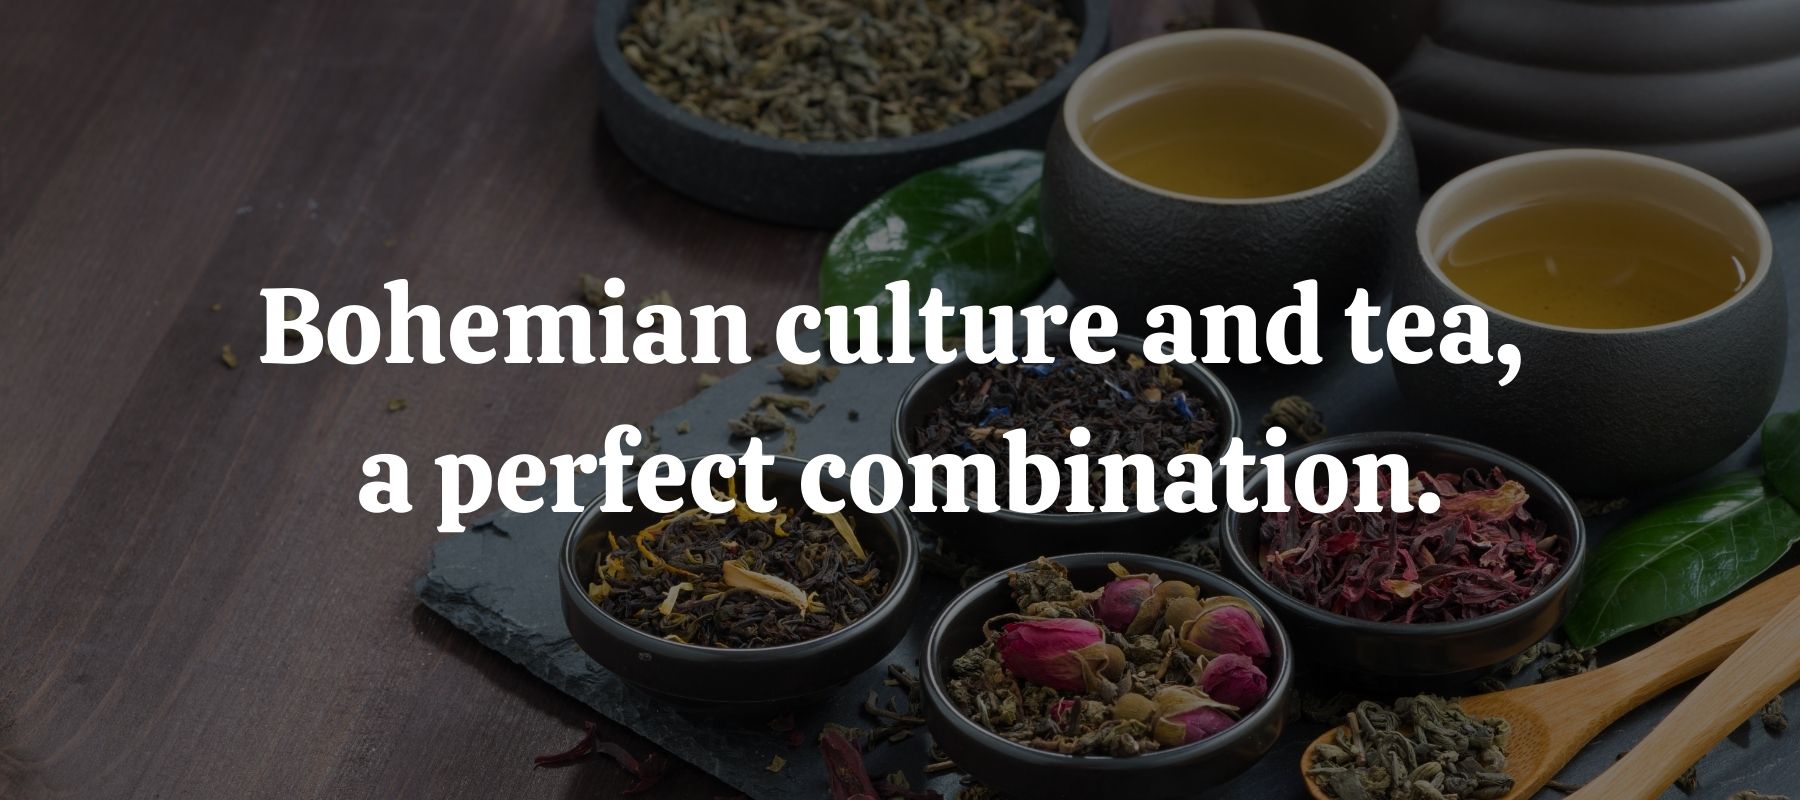 Bohemian culture and tea a perfect combination.